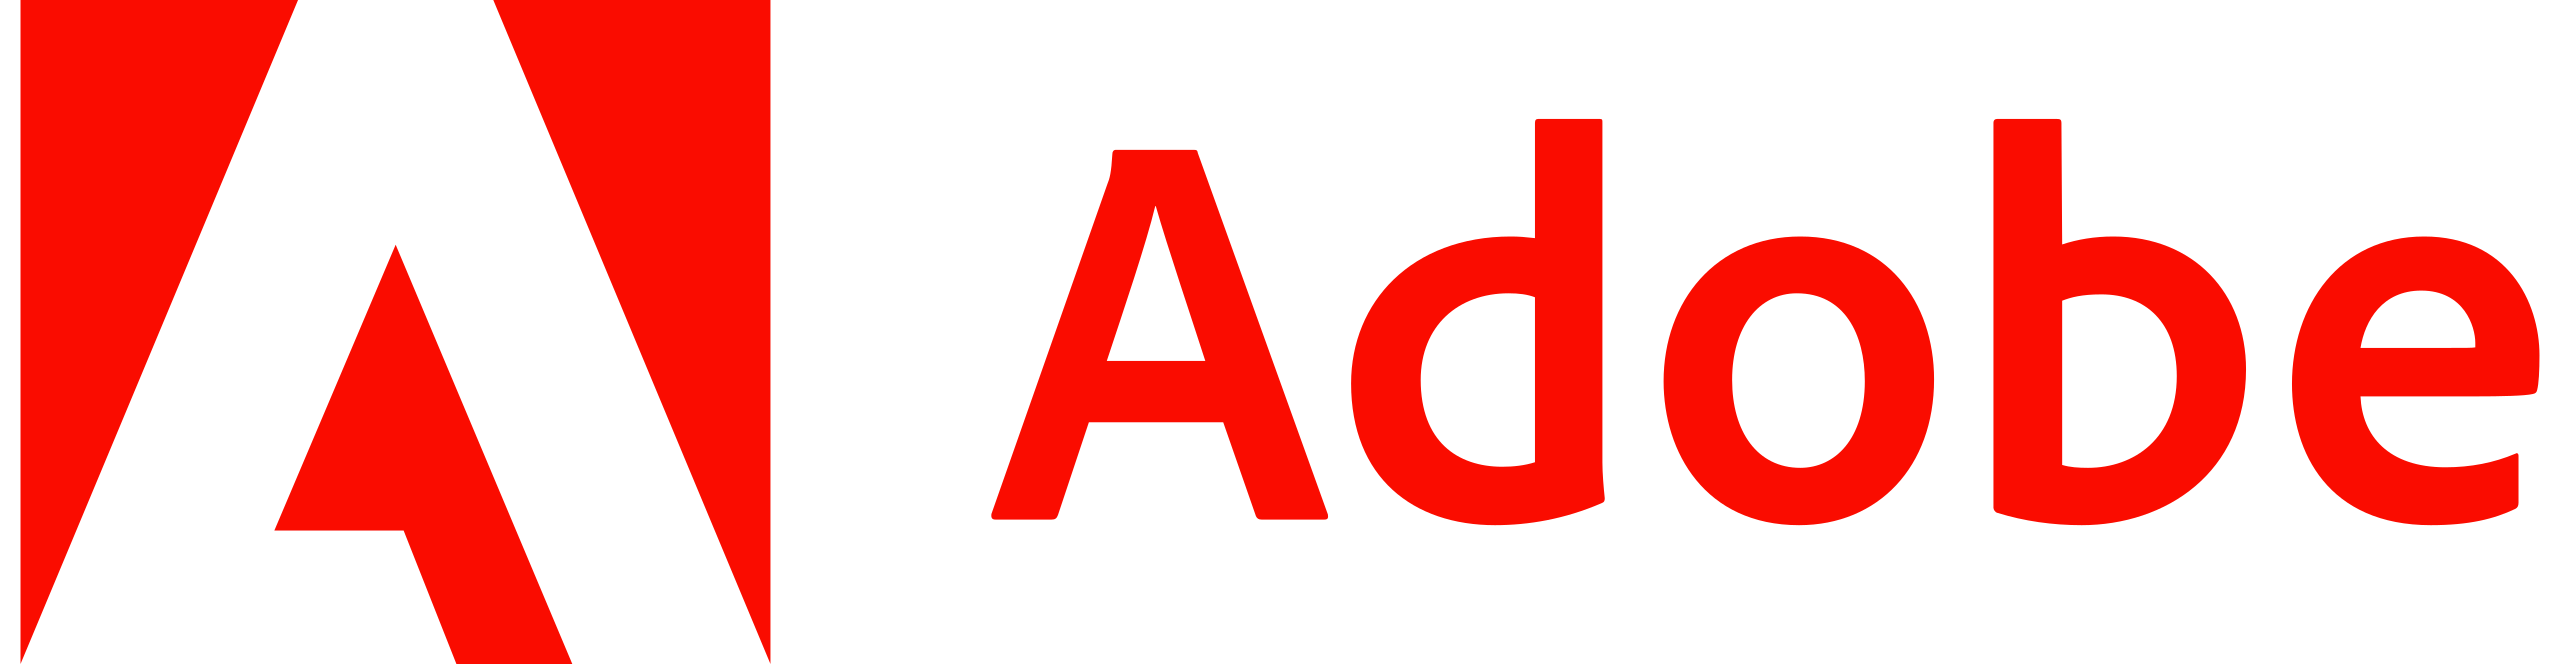 Adobe Corporate logo